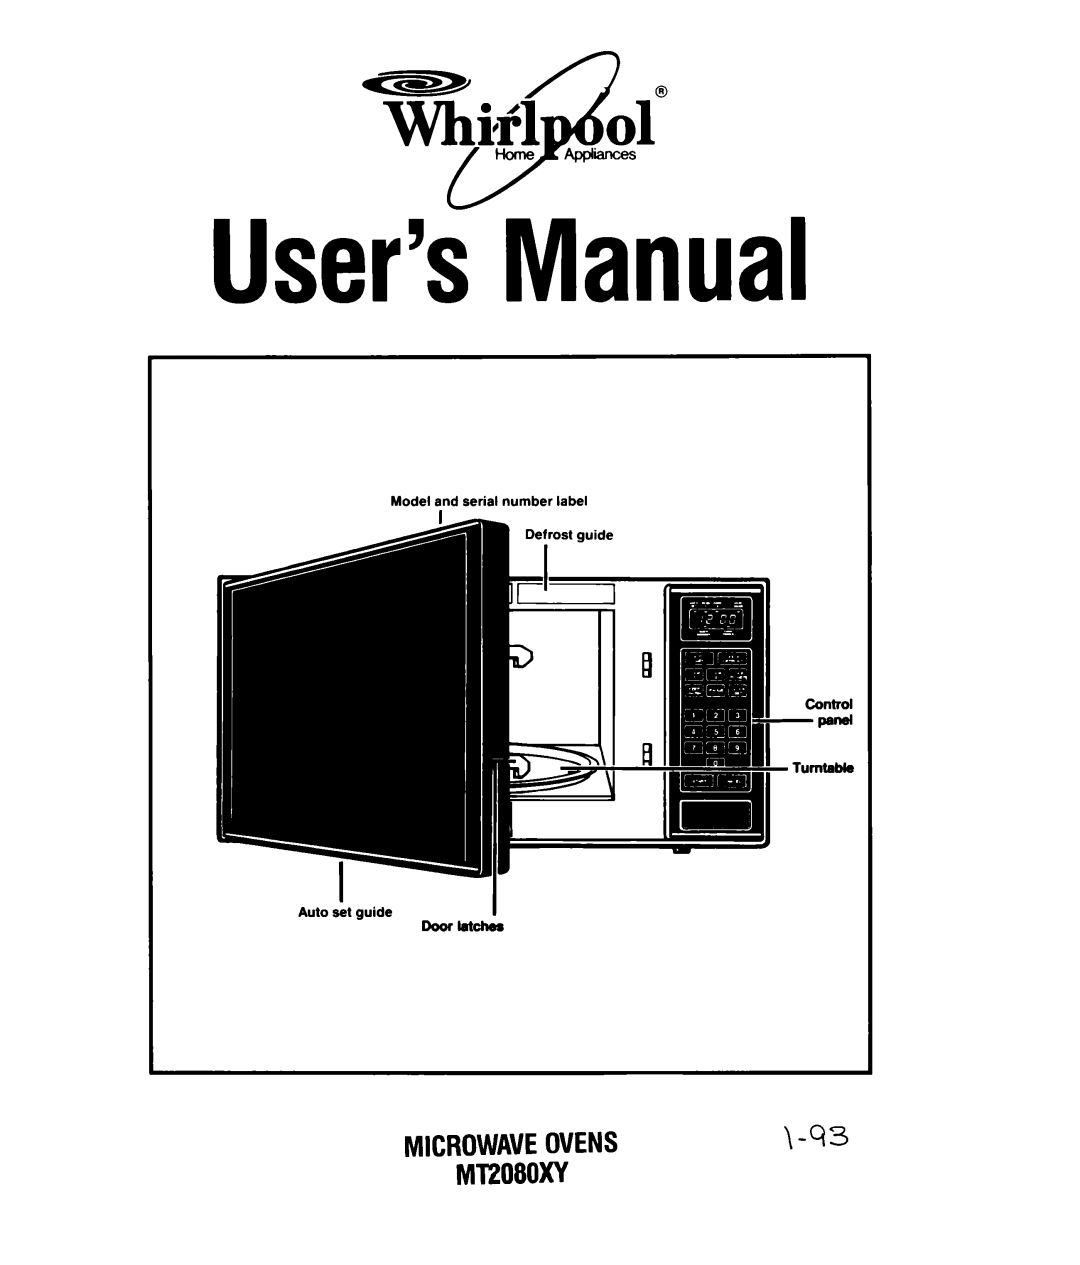 Whirlpool MTZ080XY user manual MICROWAVEOVENS\-93 MTZ080xY, User’sManual 